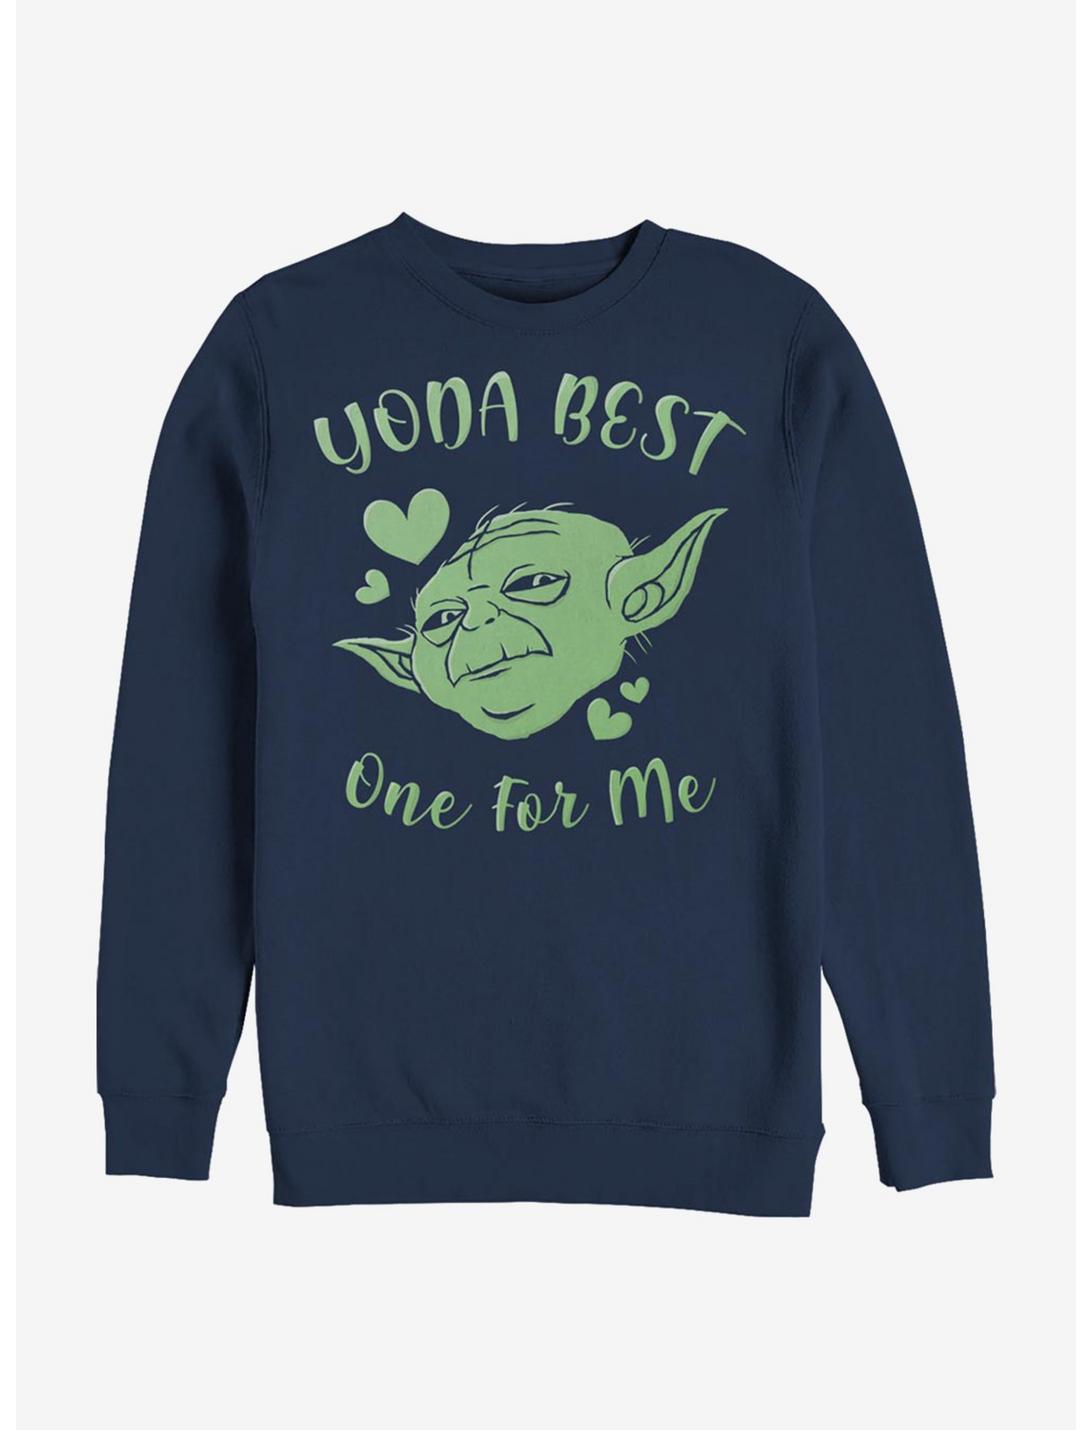 Star Wars Yoda Best Hearts Sweatshirt, NAVY, hi-res